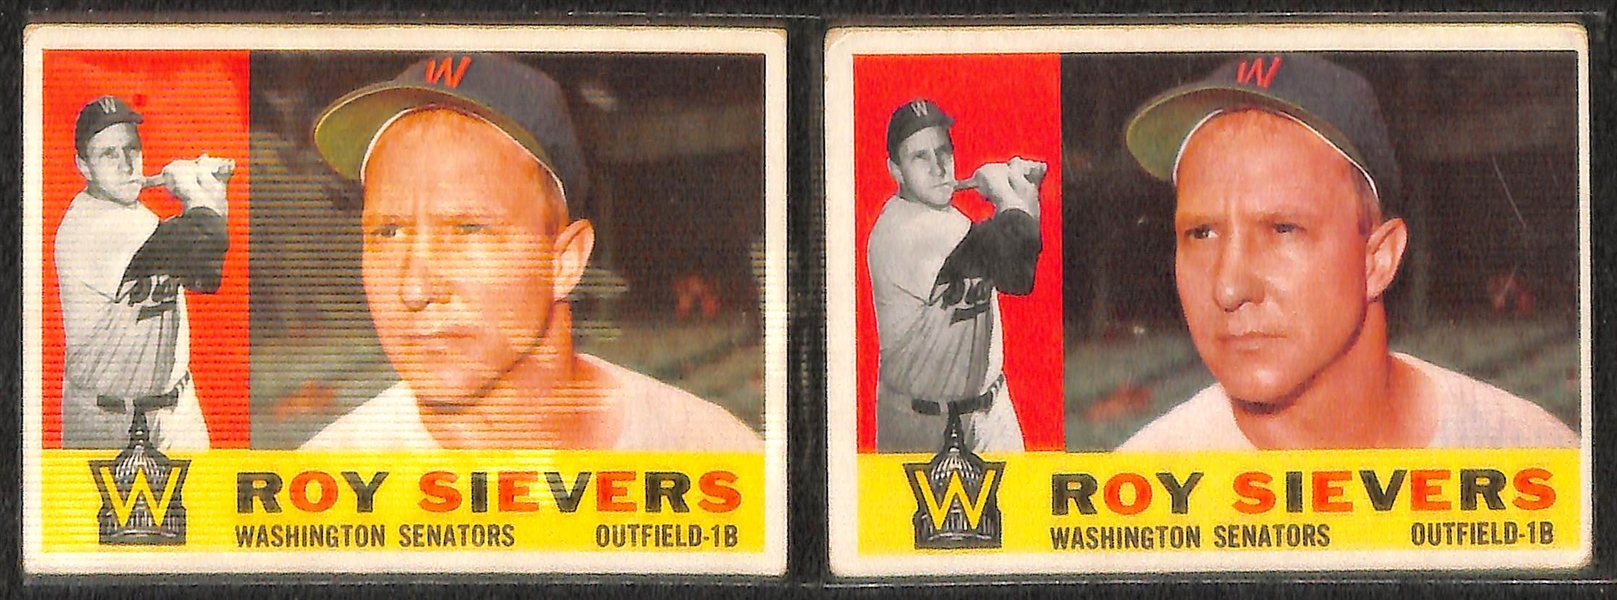 Lot of 140 - 1960 Topps Baseball Cards w. Roger Maris All-Star